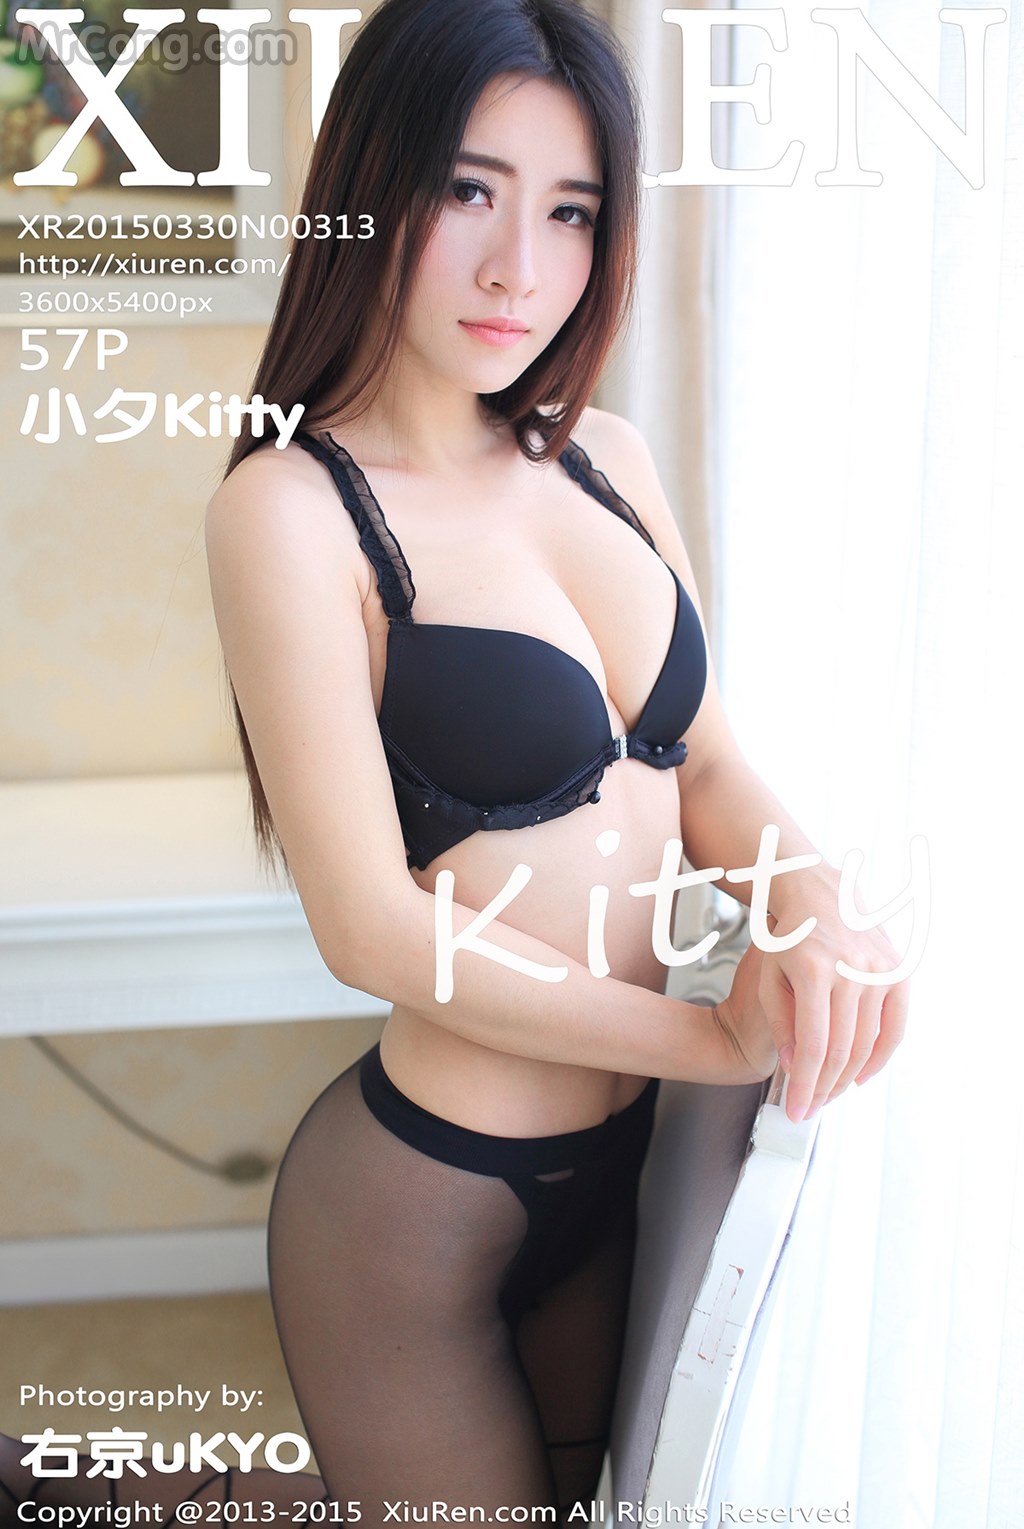 XIUREN No.313: Model Kitty (小 夕) (58 pictures) photo 1-0